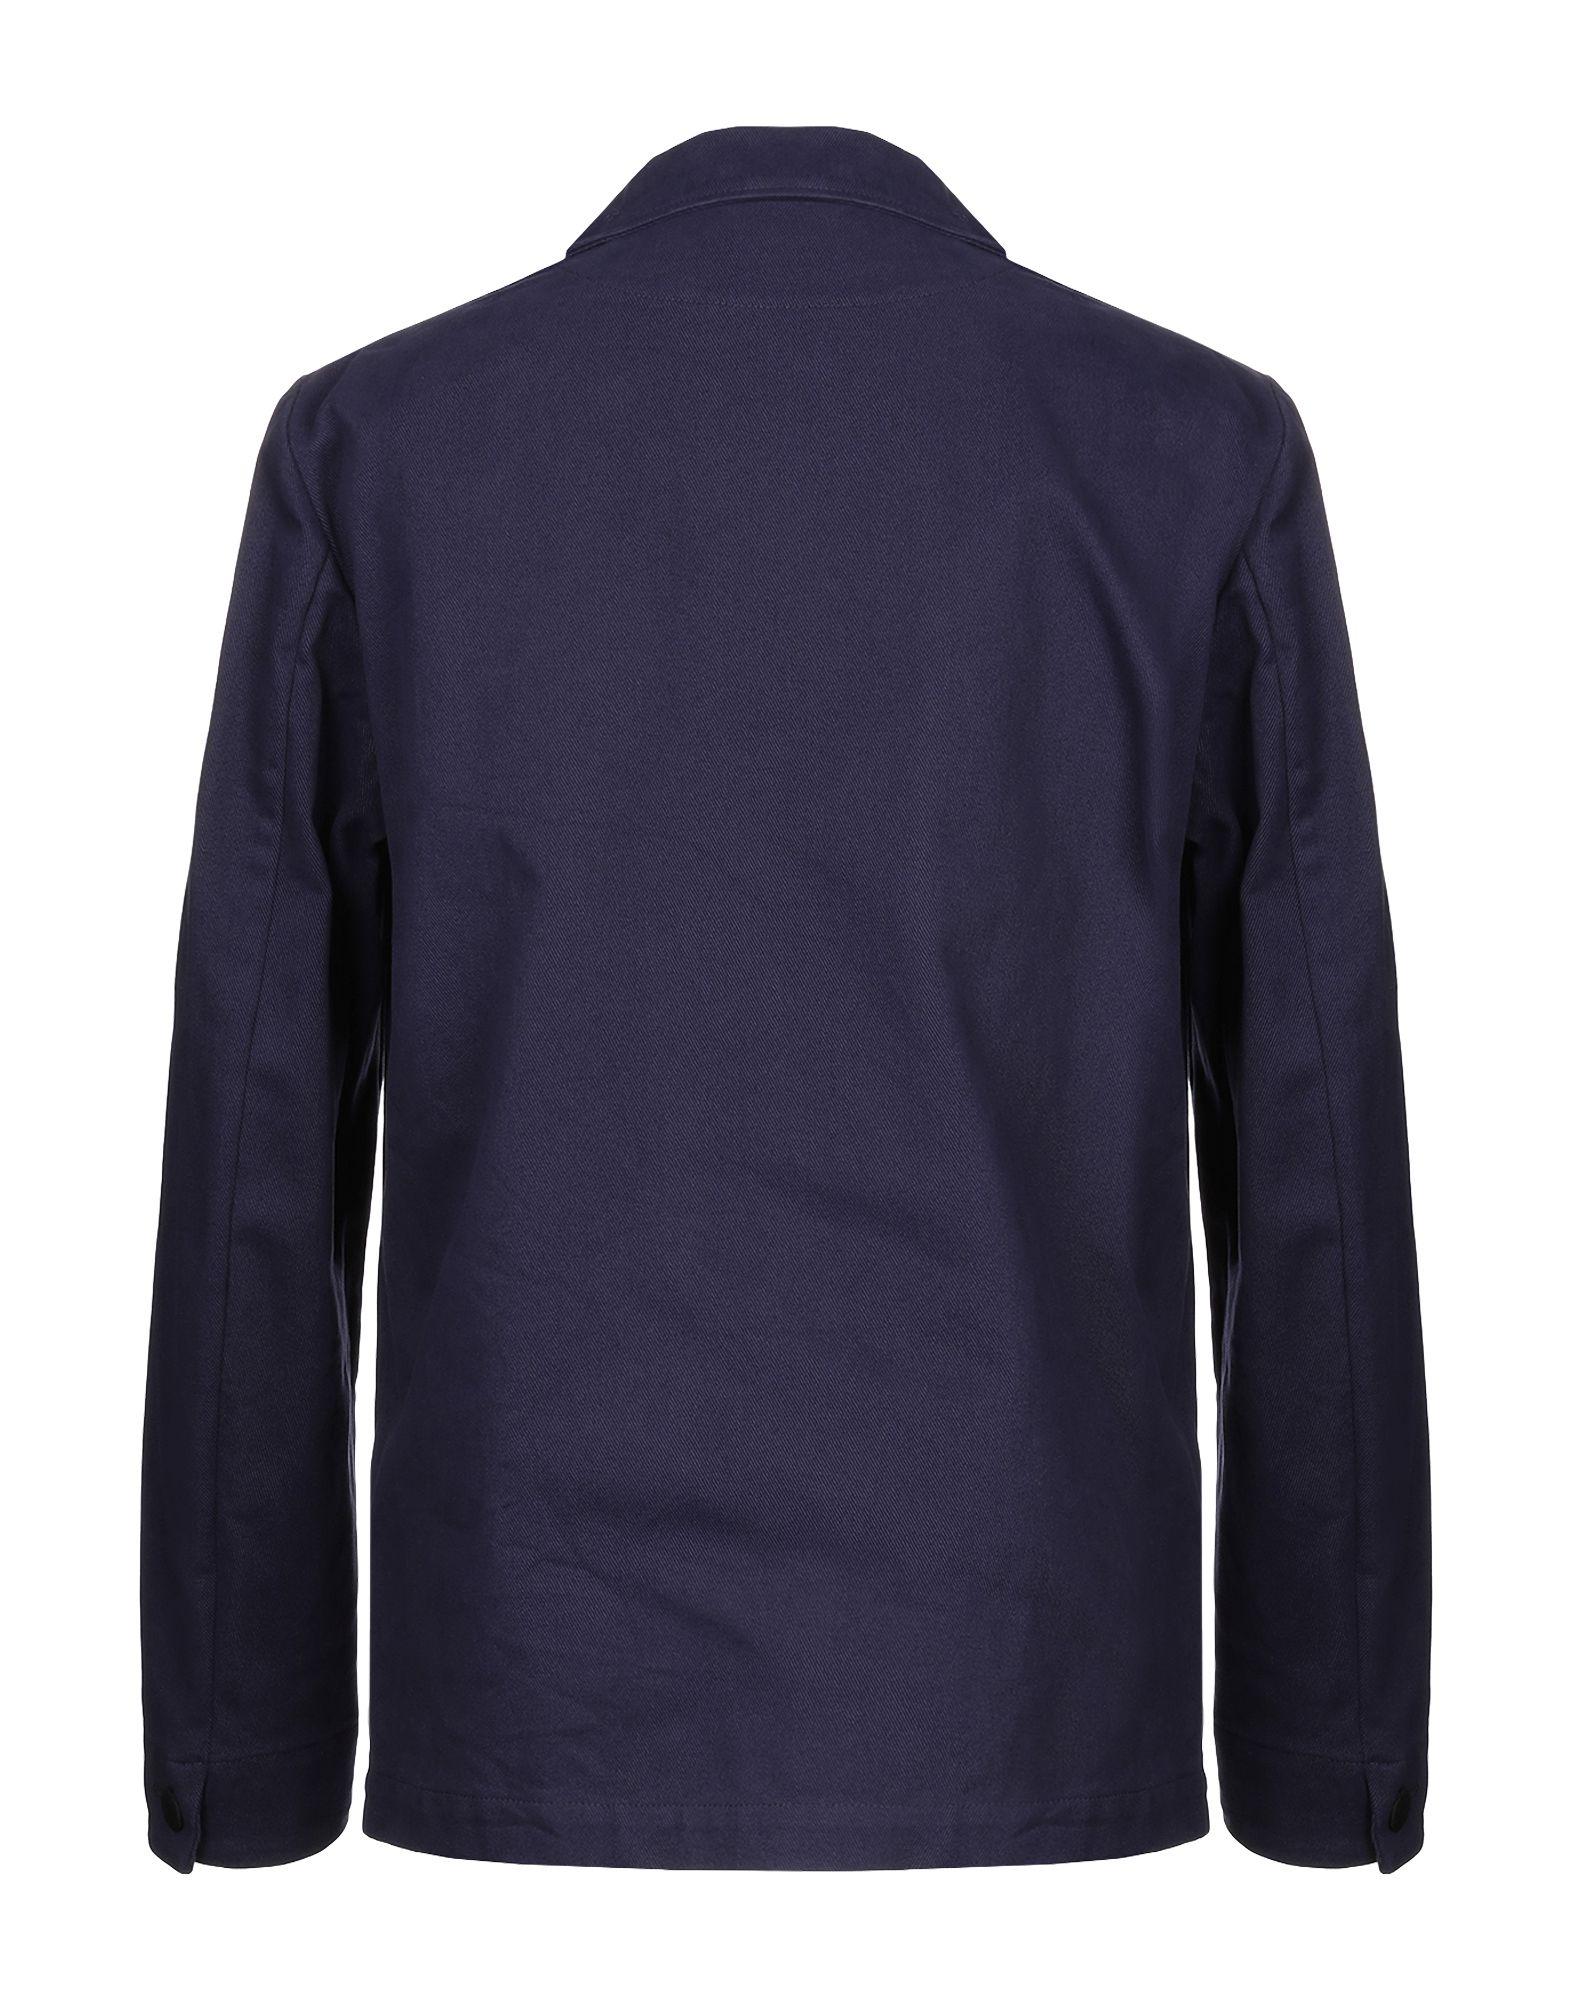 Mauro Grifoni Cotton Jacket in Dark Blue (Blue) for Men - Lyst